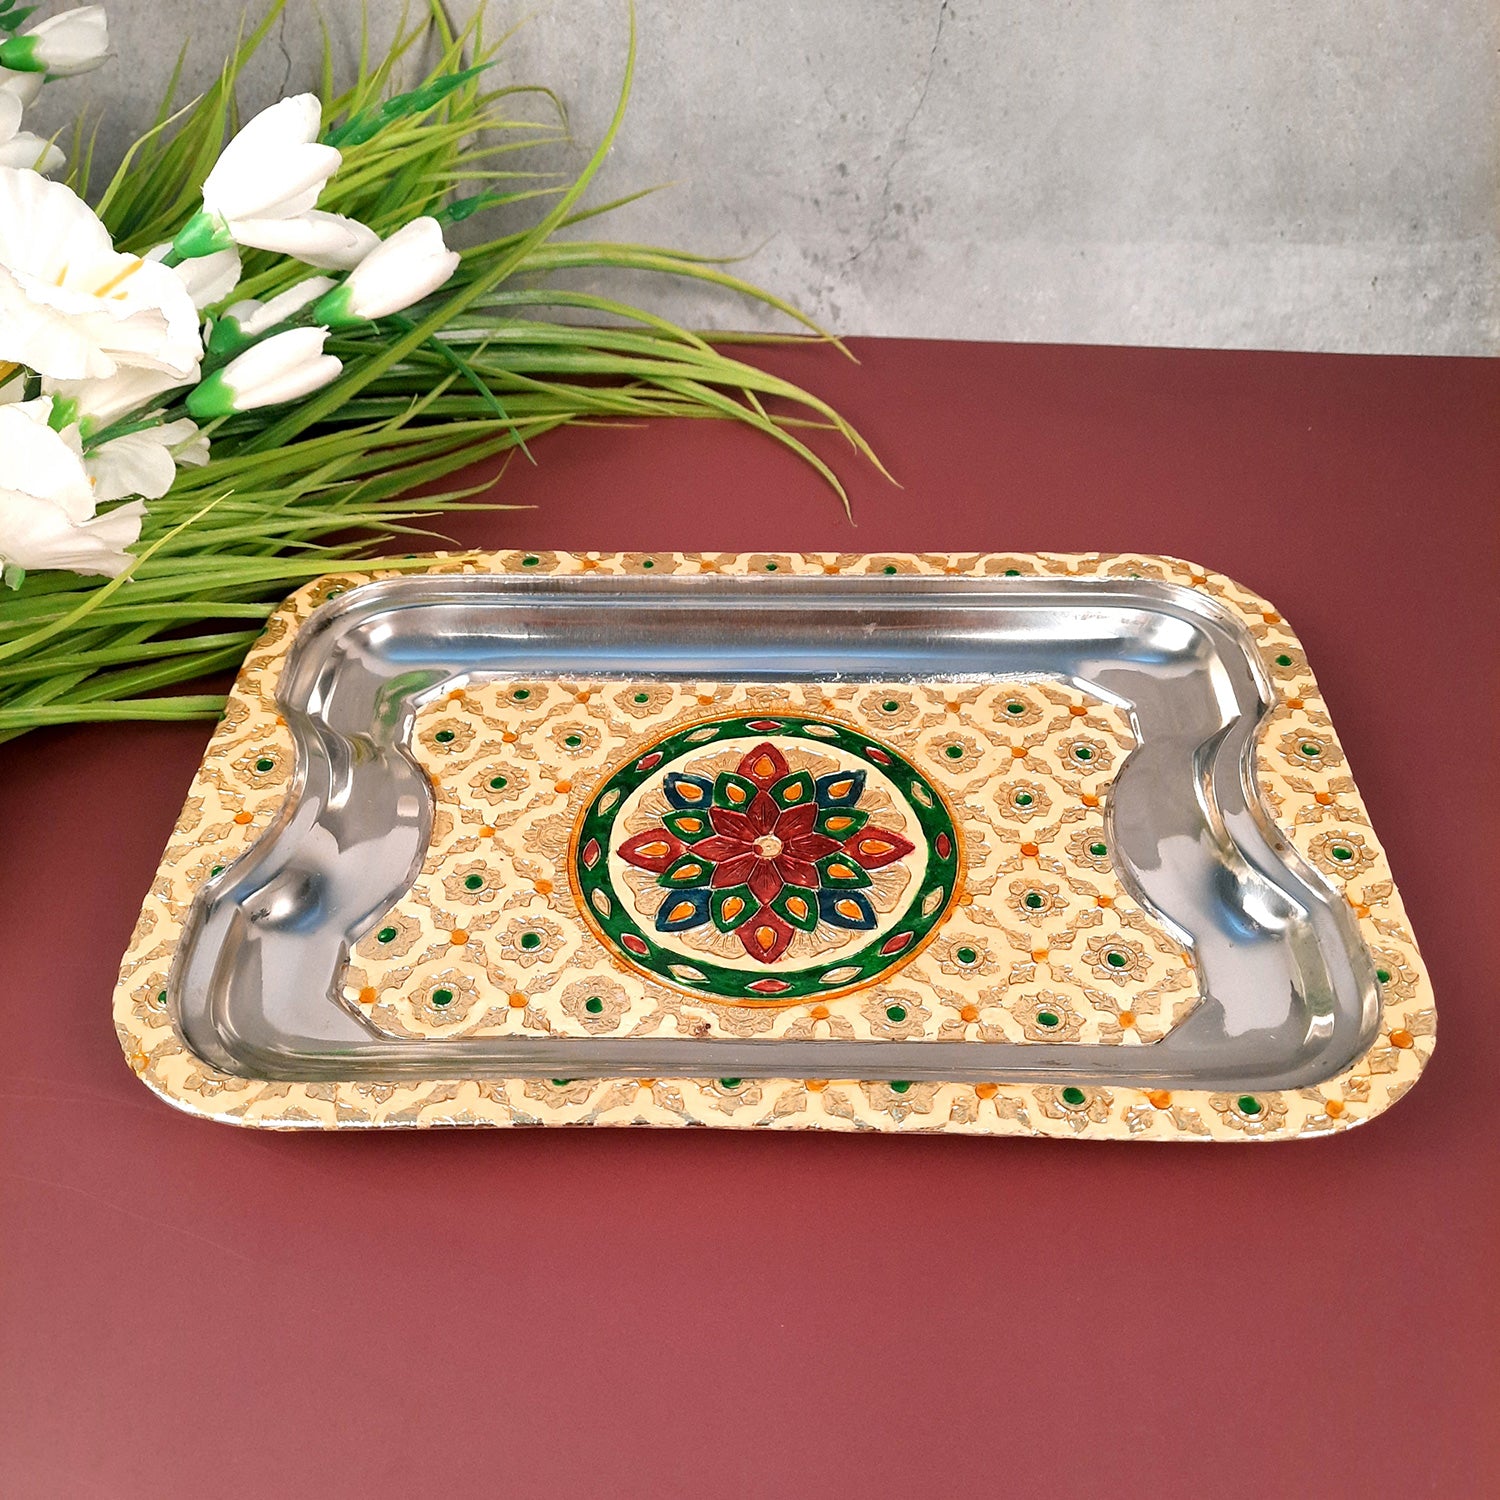 Serving Tray | Tea & Snacks Serving Platter | Rectangular Steel Tray - for Home, Dining Table, Kitchen Decor | Wedding & Housewarming Gift - 12 Inch - Apkamart